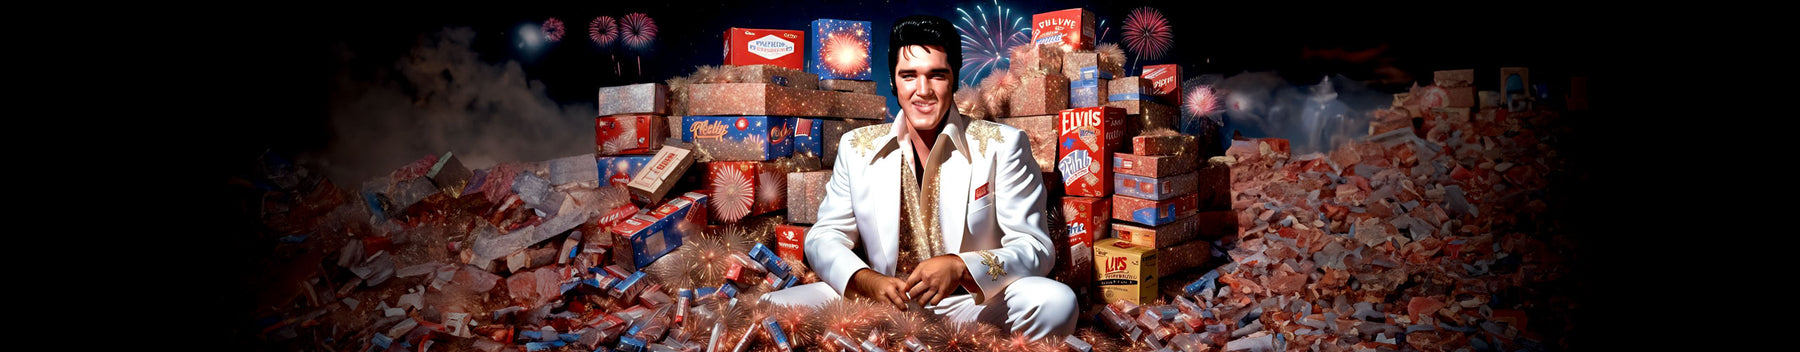 Elvis Presley's Explosive Love for Fireworks